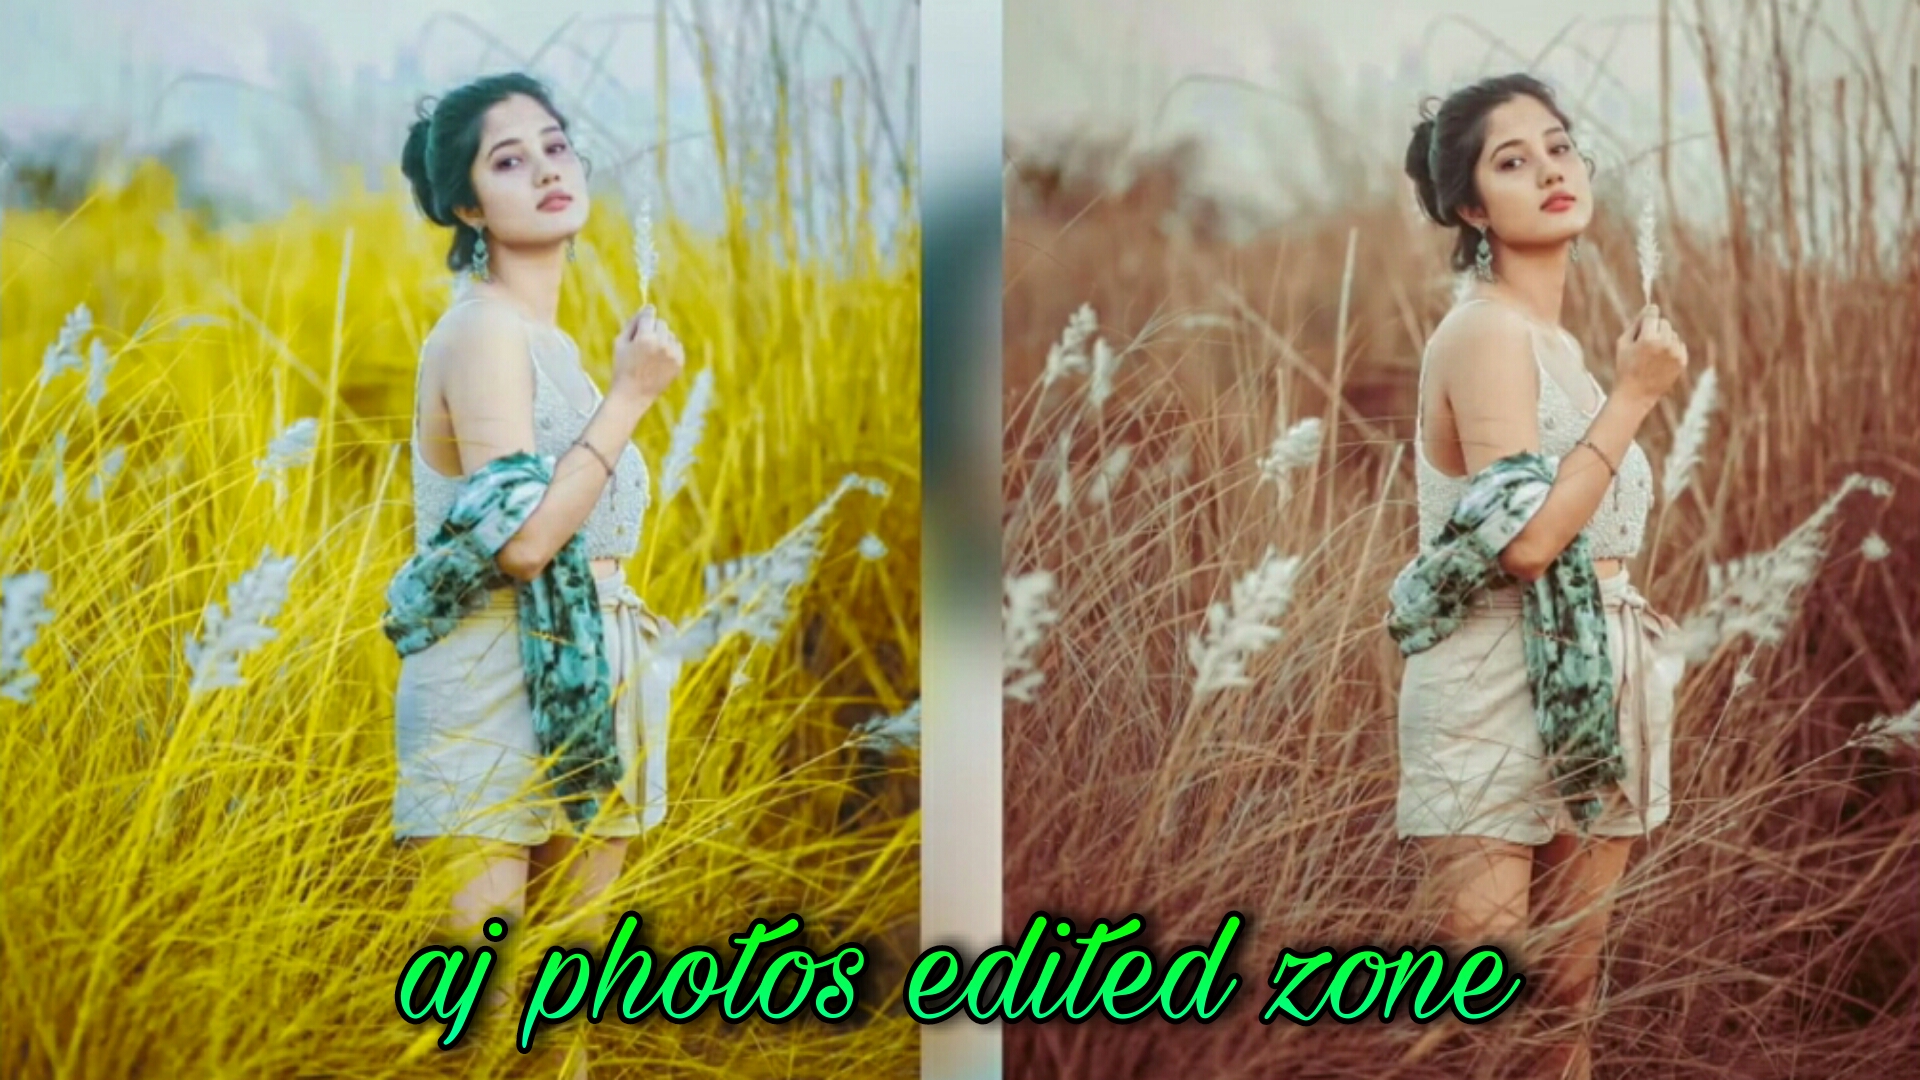 lightroom photo editing | dual tone editing | picsart photo editing new style 2021 |  background